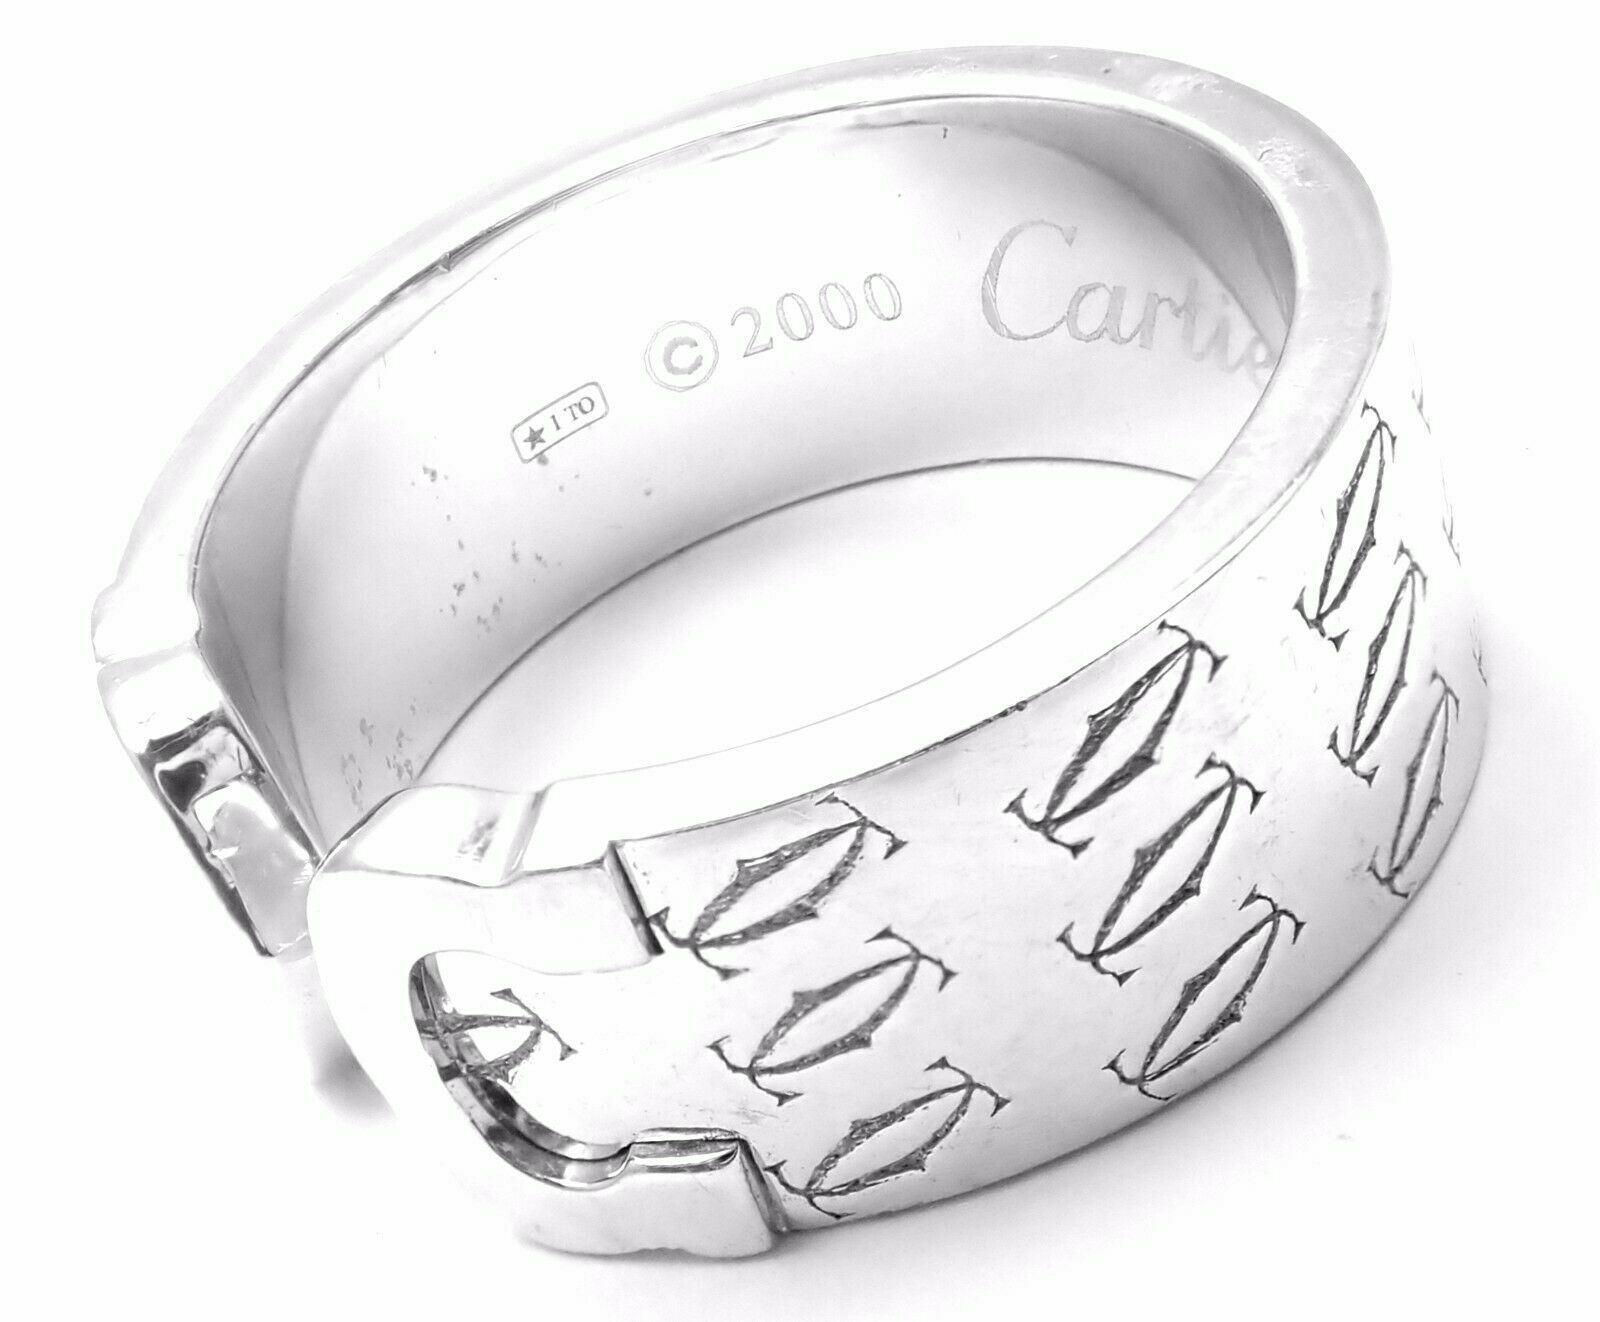 Authentic! Cartier Logo 18K White Gold Double C Motif Monogram Band Ring Sz 6.25